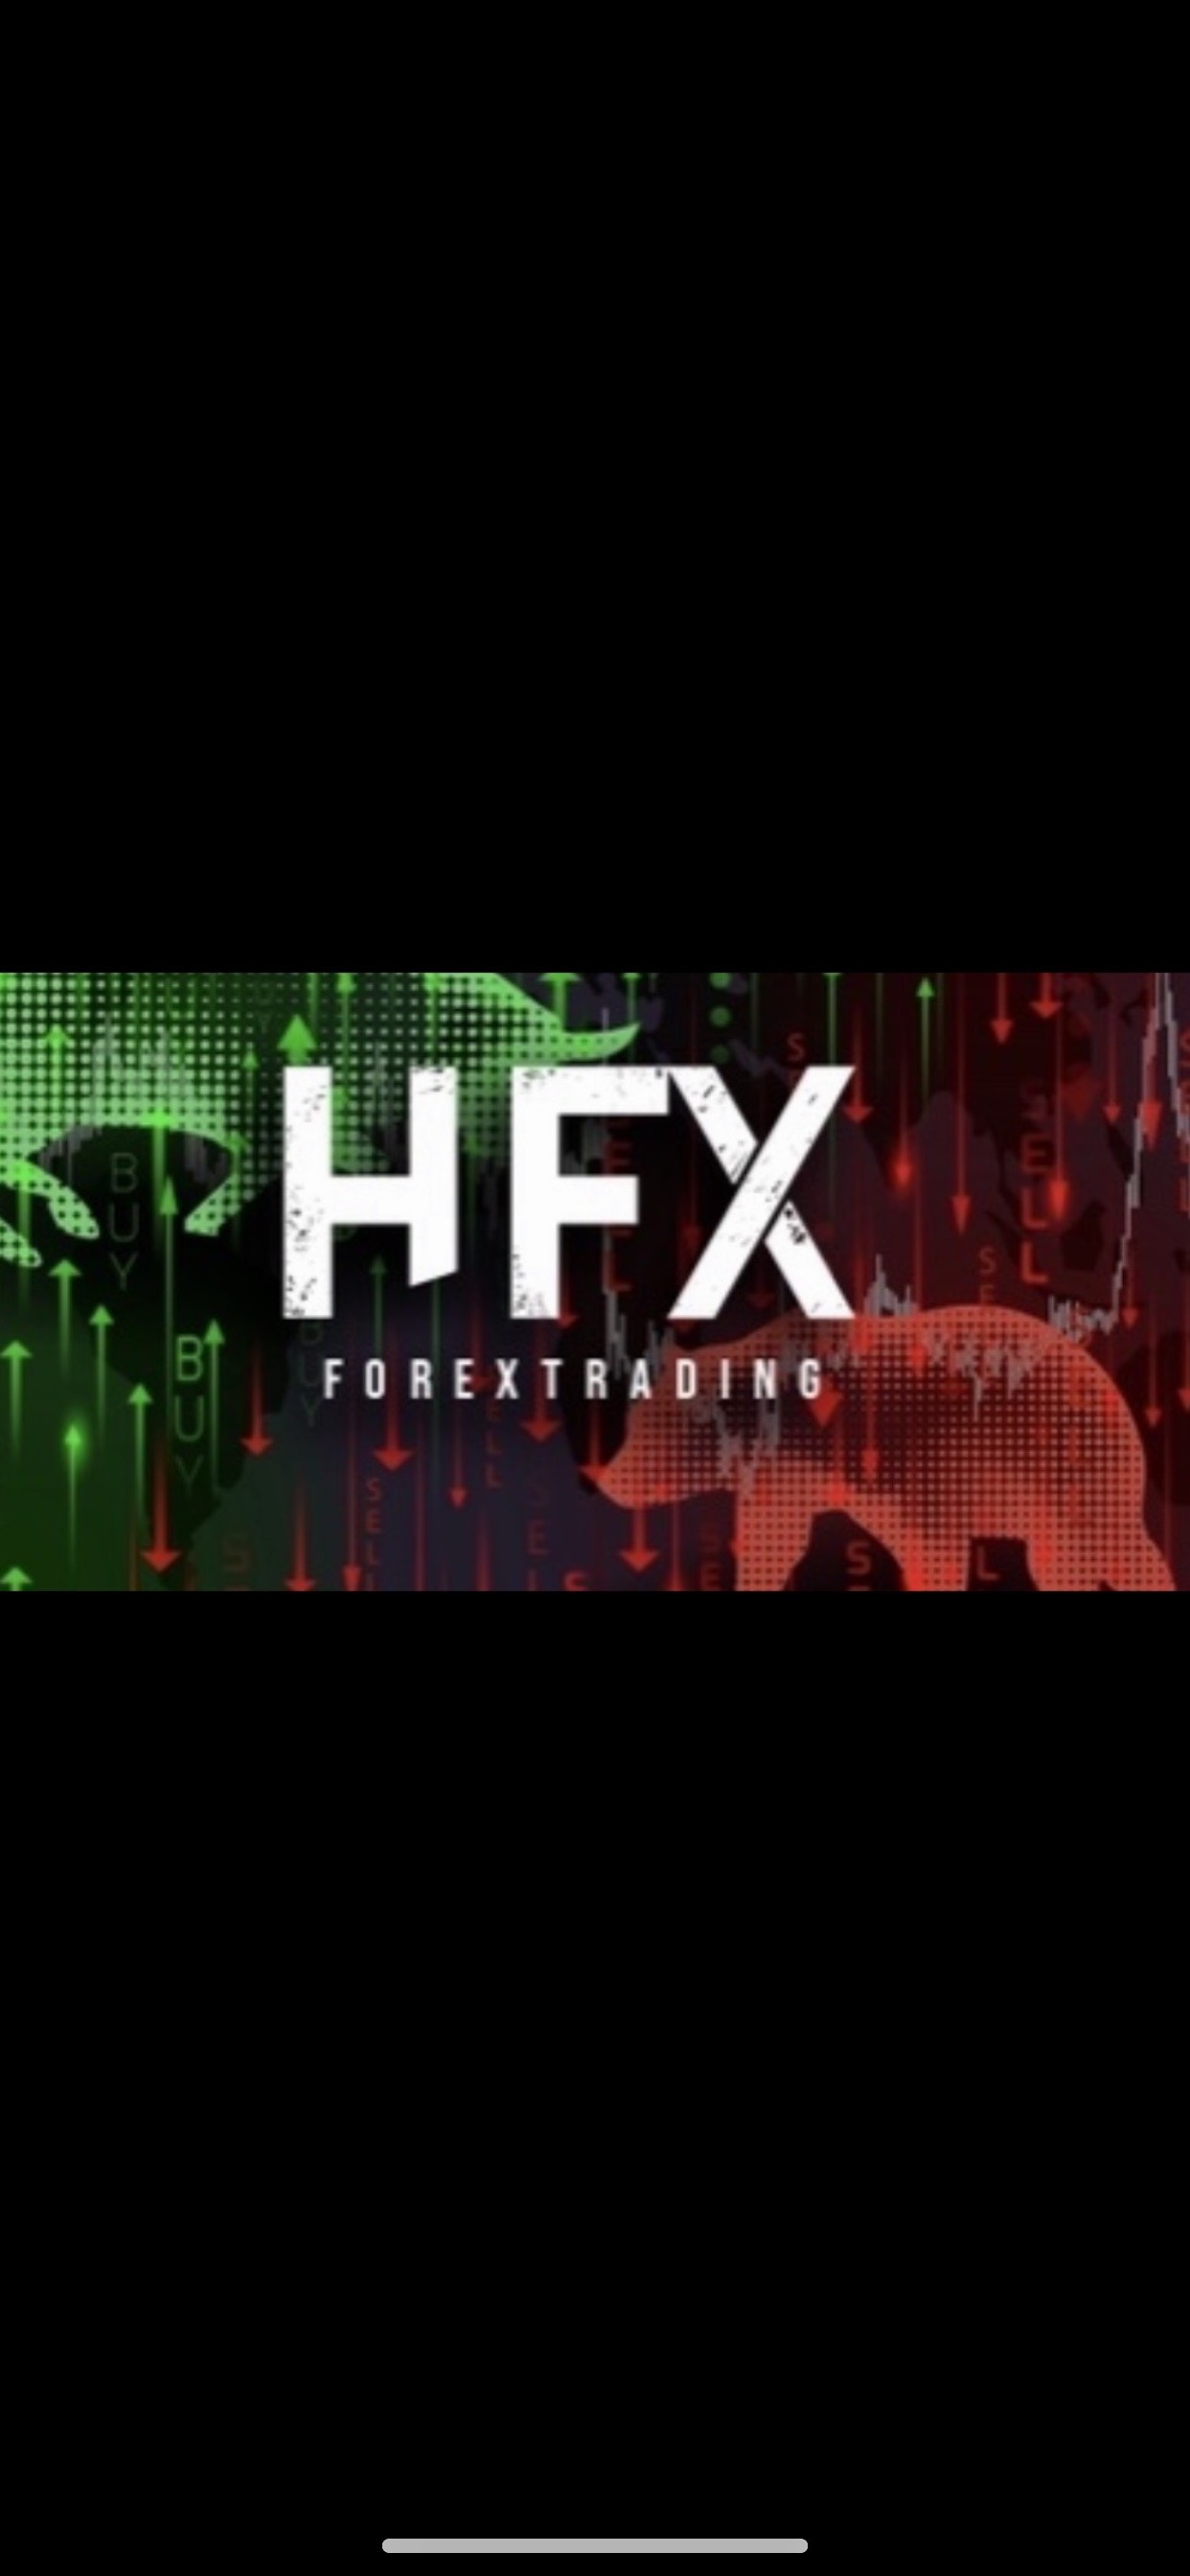 Hfx live trading session